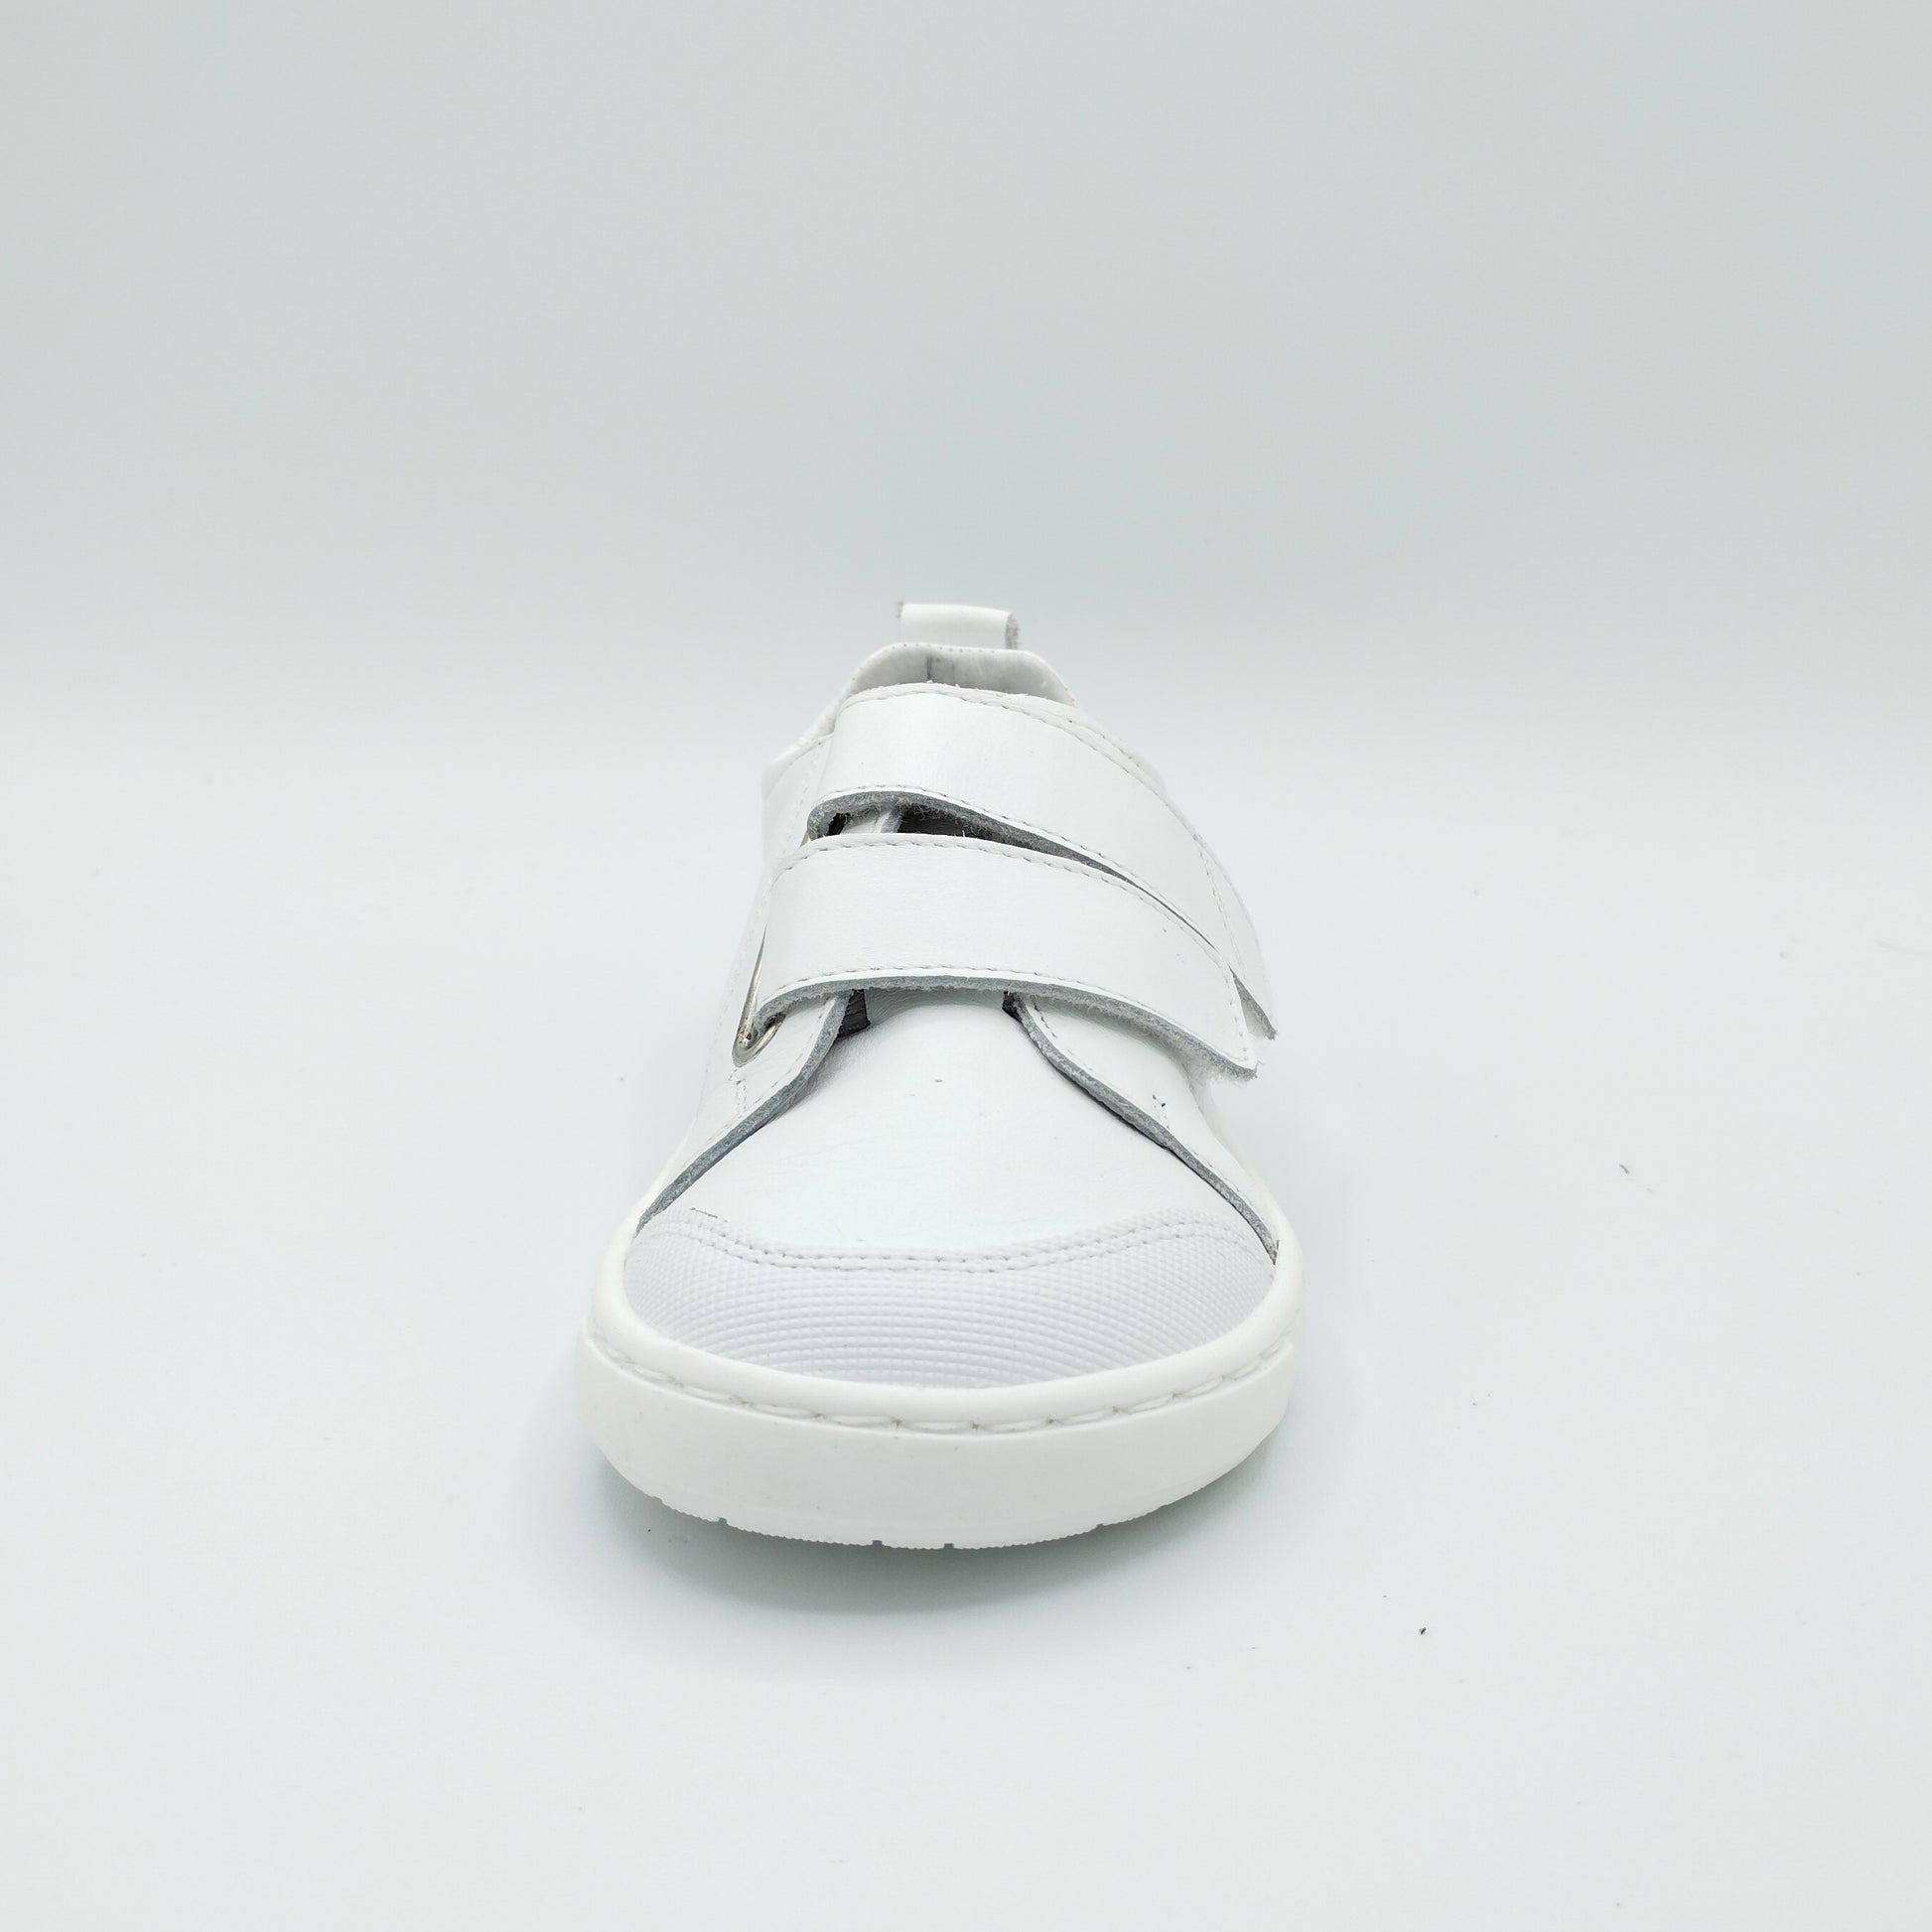 Colegial blanco Rio Blanditos by Crios – Aister Shoes